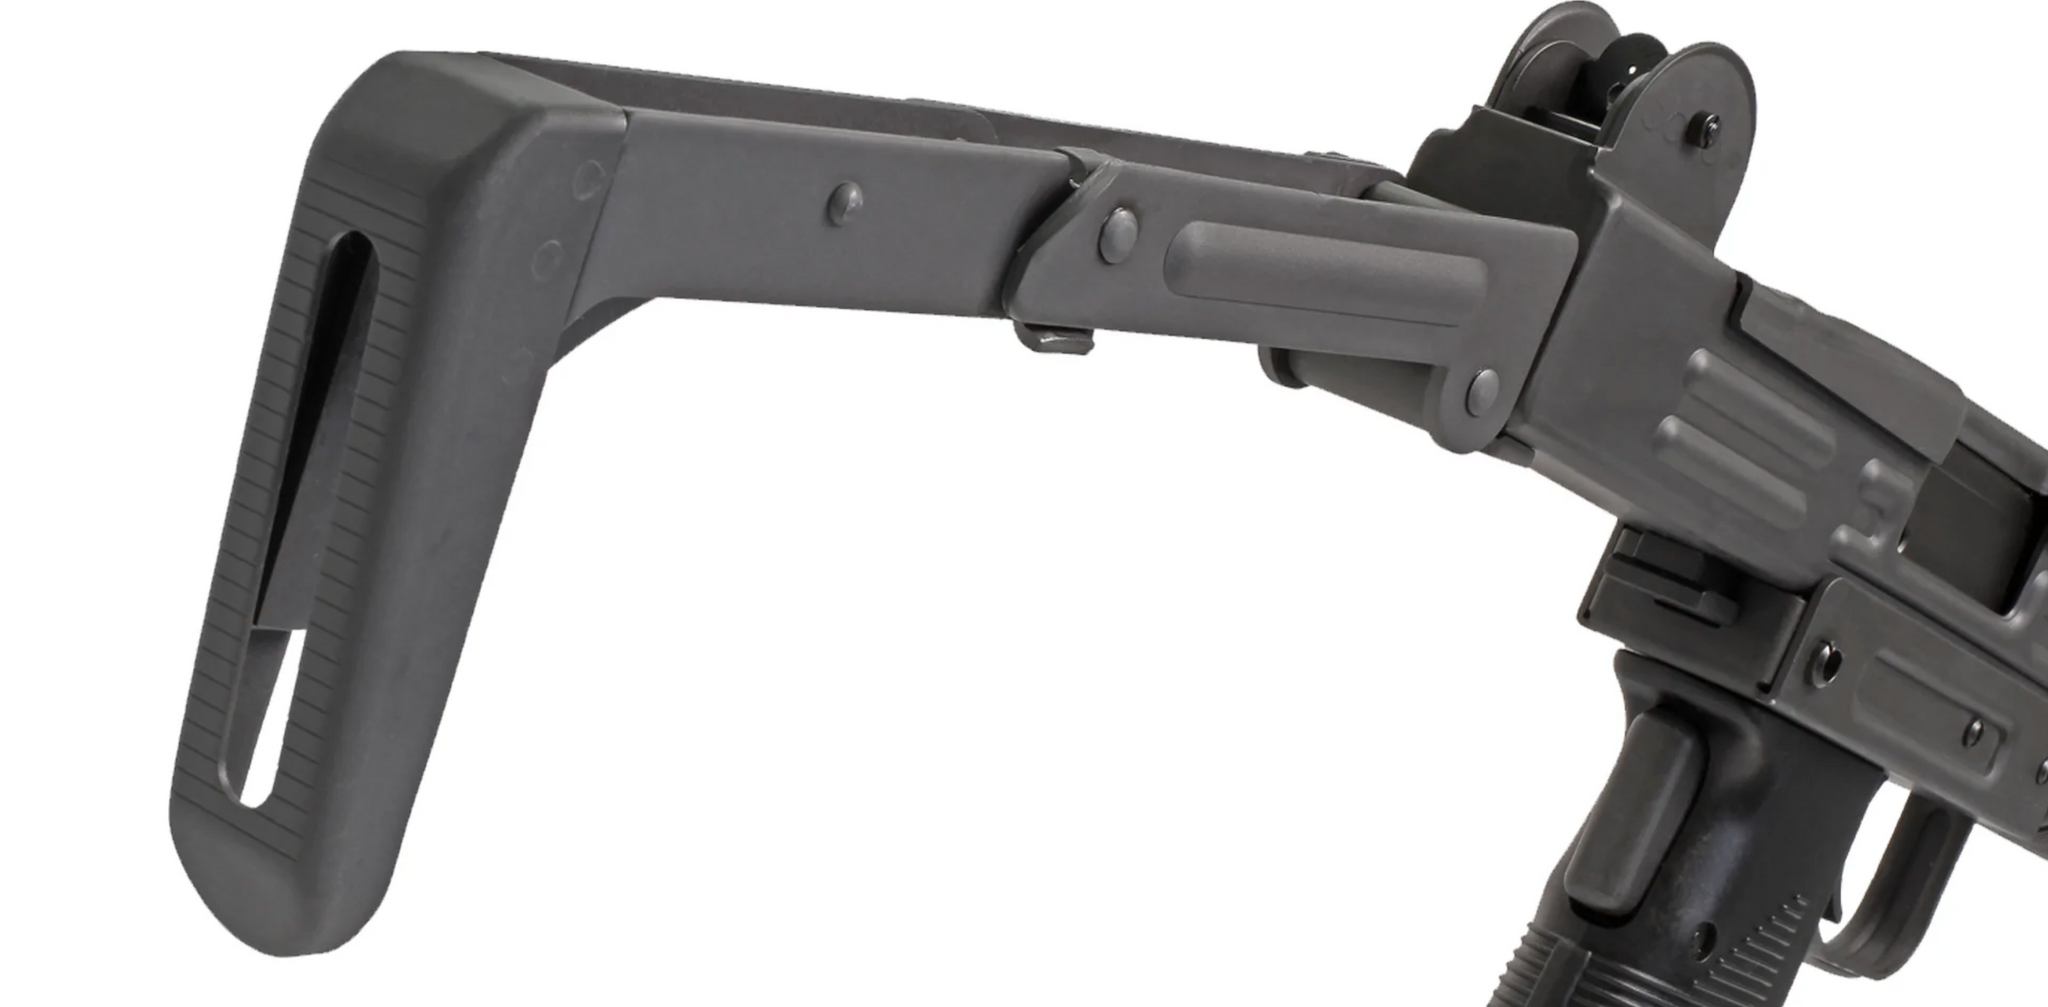 NORTHEAST Maschinenpistole UZI GBB MP2A1 (Newest Version) | Bunny